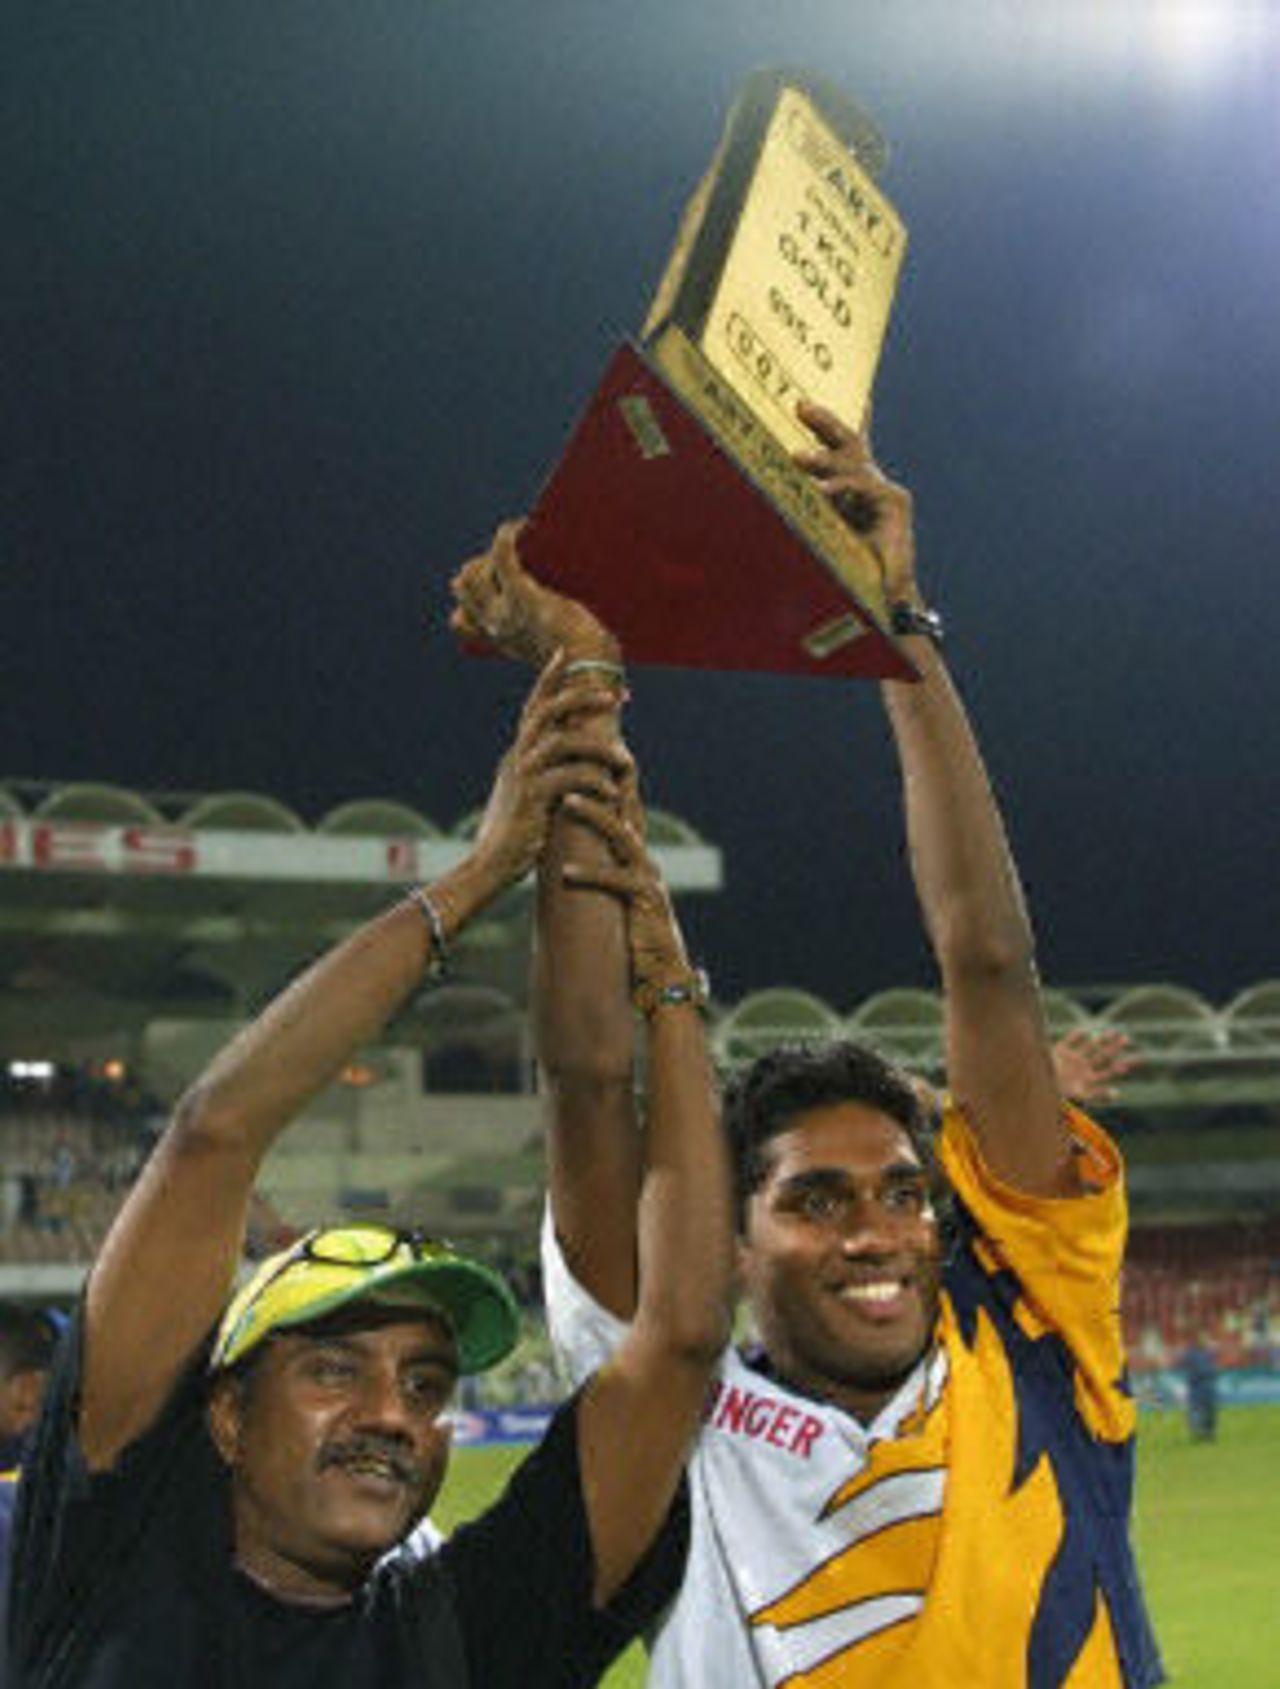 A Sri Lankan supporter raises the ARY Gold Cup with Akalanka Ganegama, Final at Sharjah, Pakistan v Sri Lanka, 20 April 2001